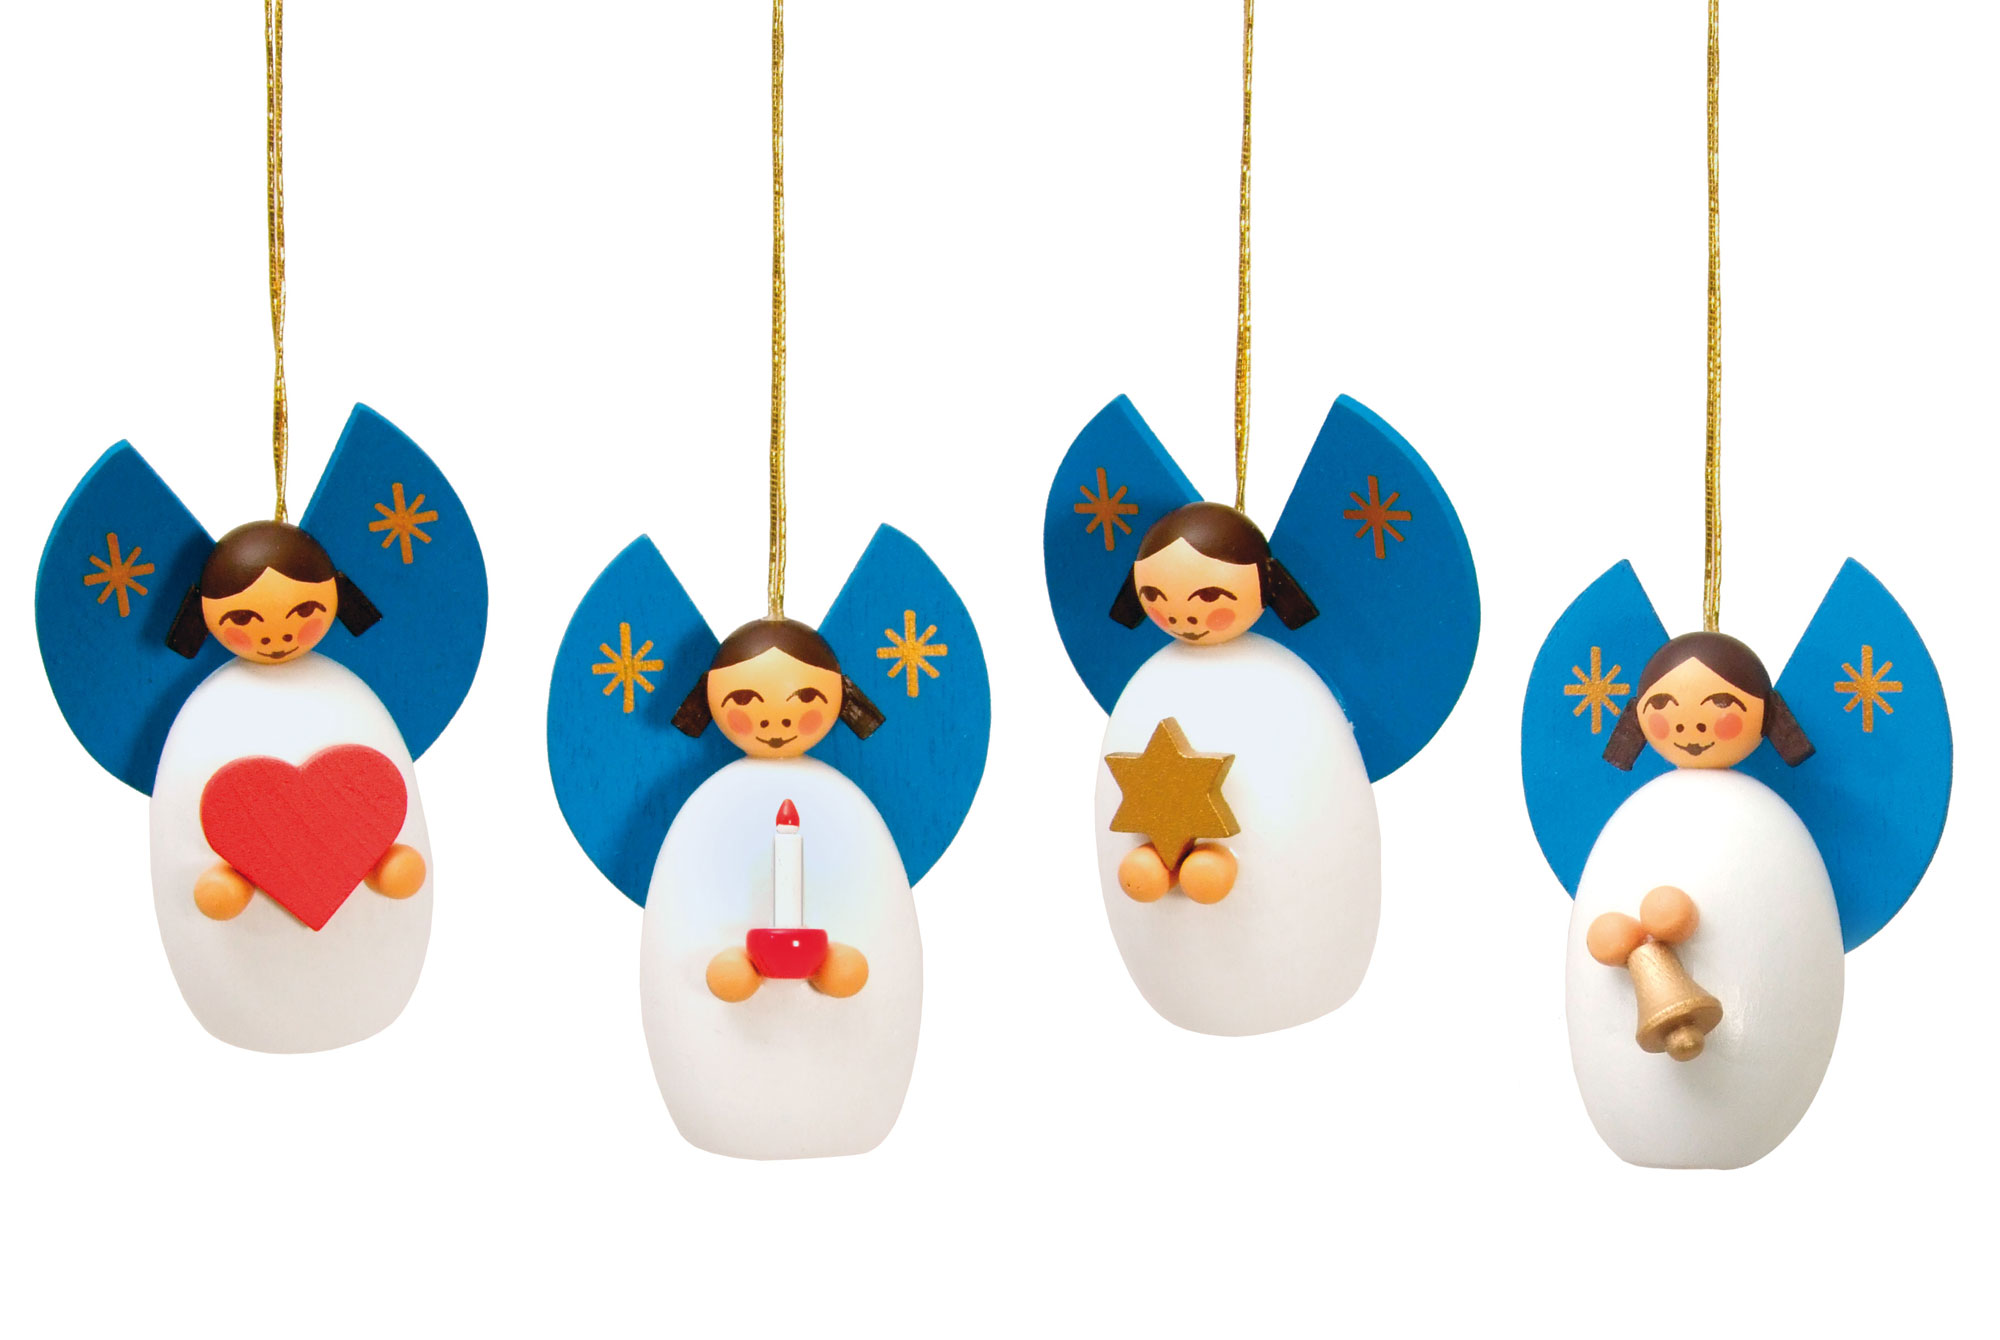 Baumbehang-Set:  4 Engel mit Stern, Kerze, Glocke, Herz